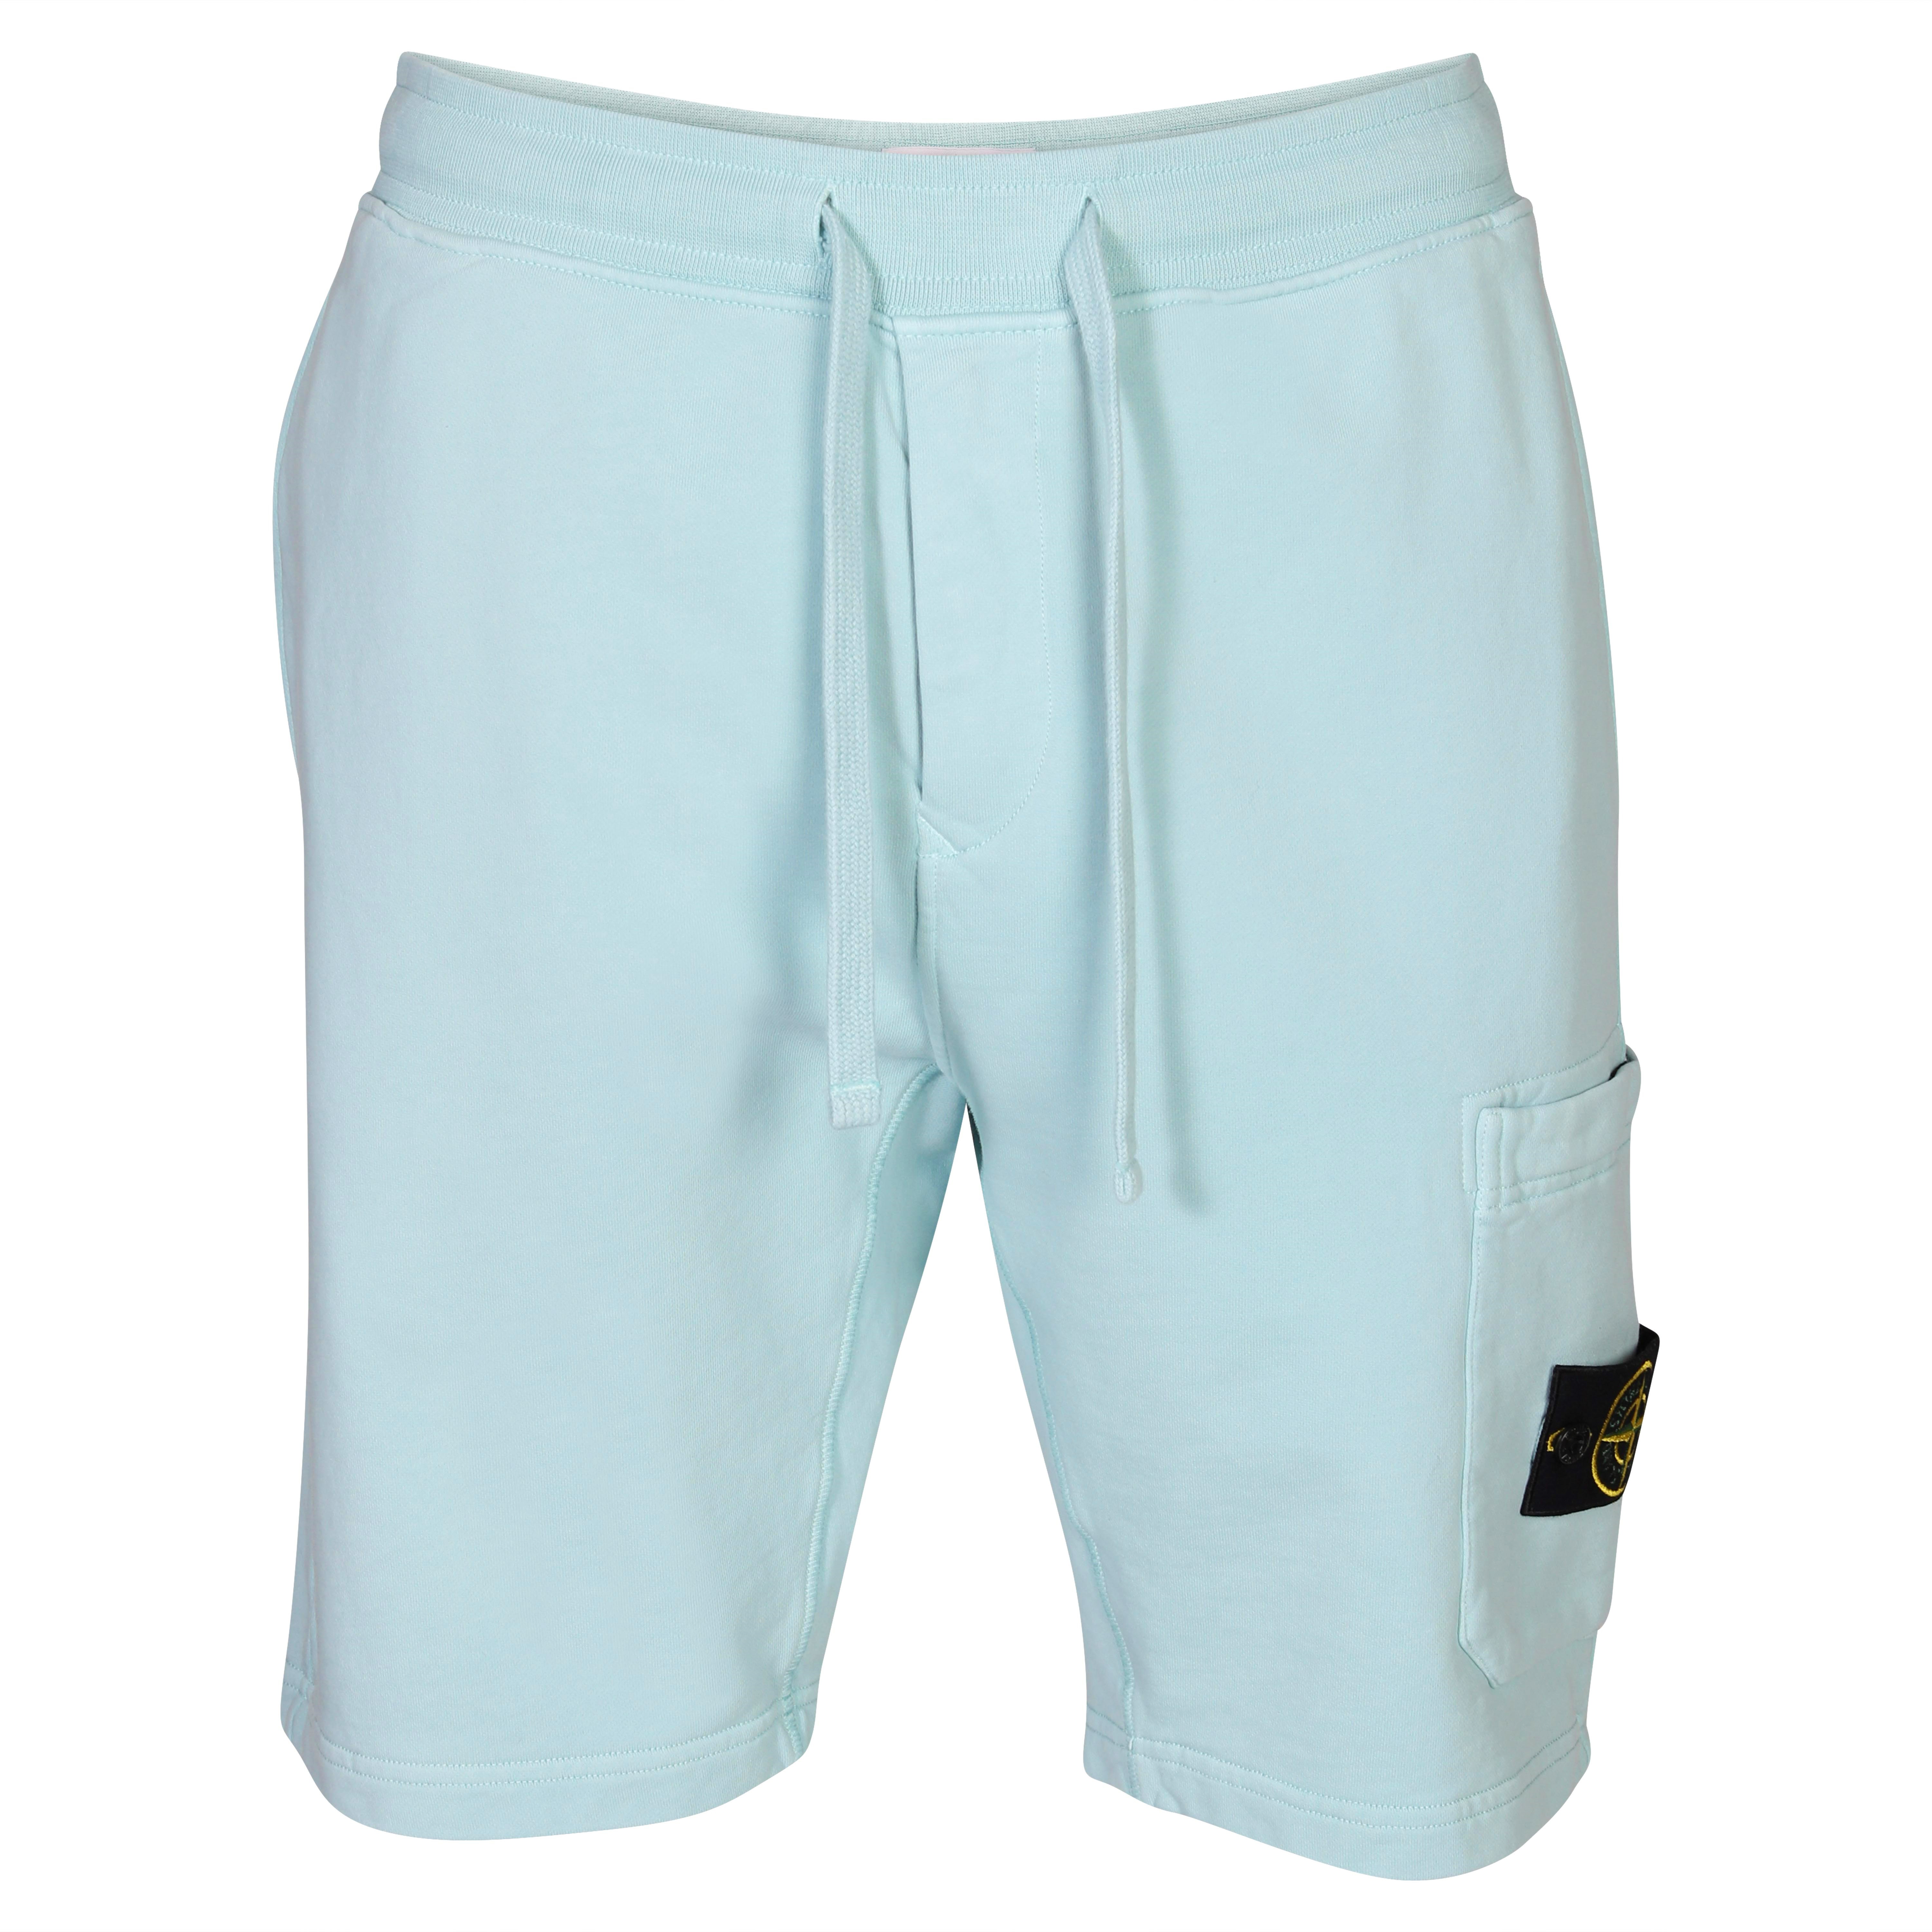 Stone Island Sweat Shorts in Light Blue L